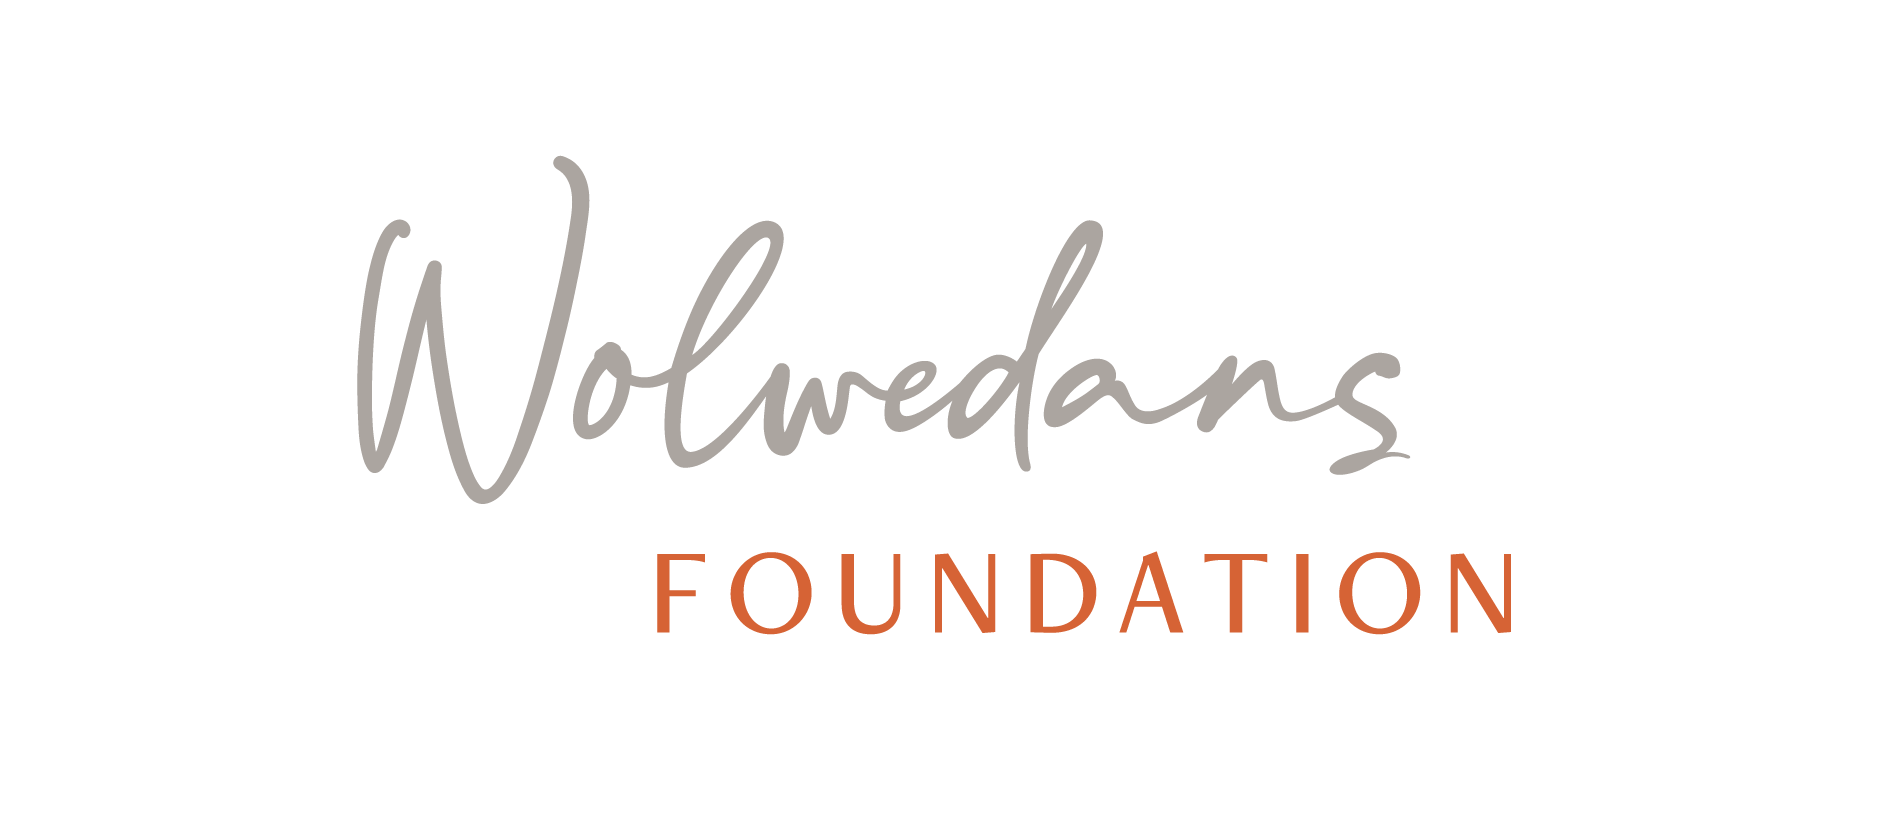 Wolwedans Foundation